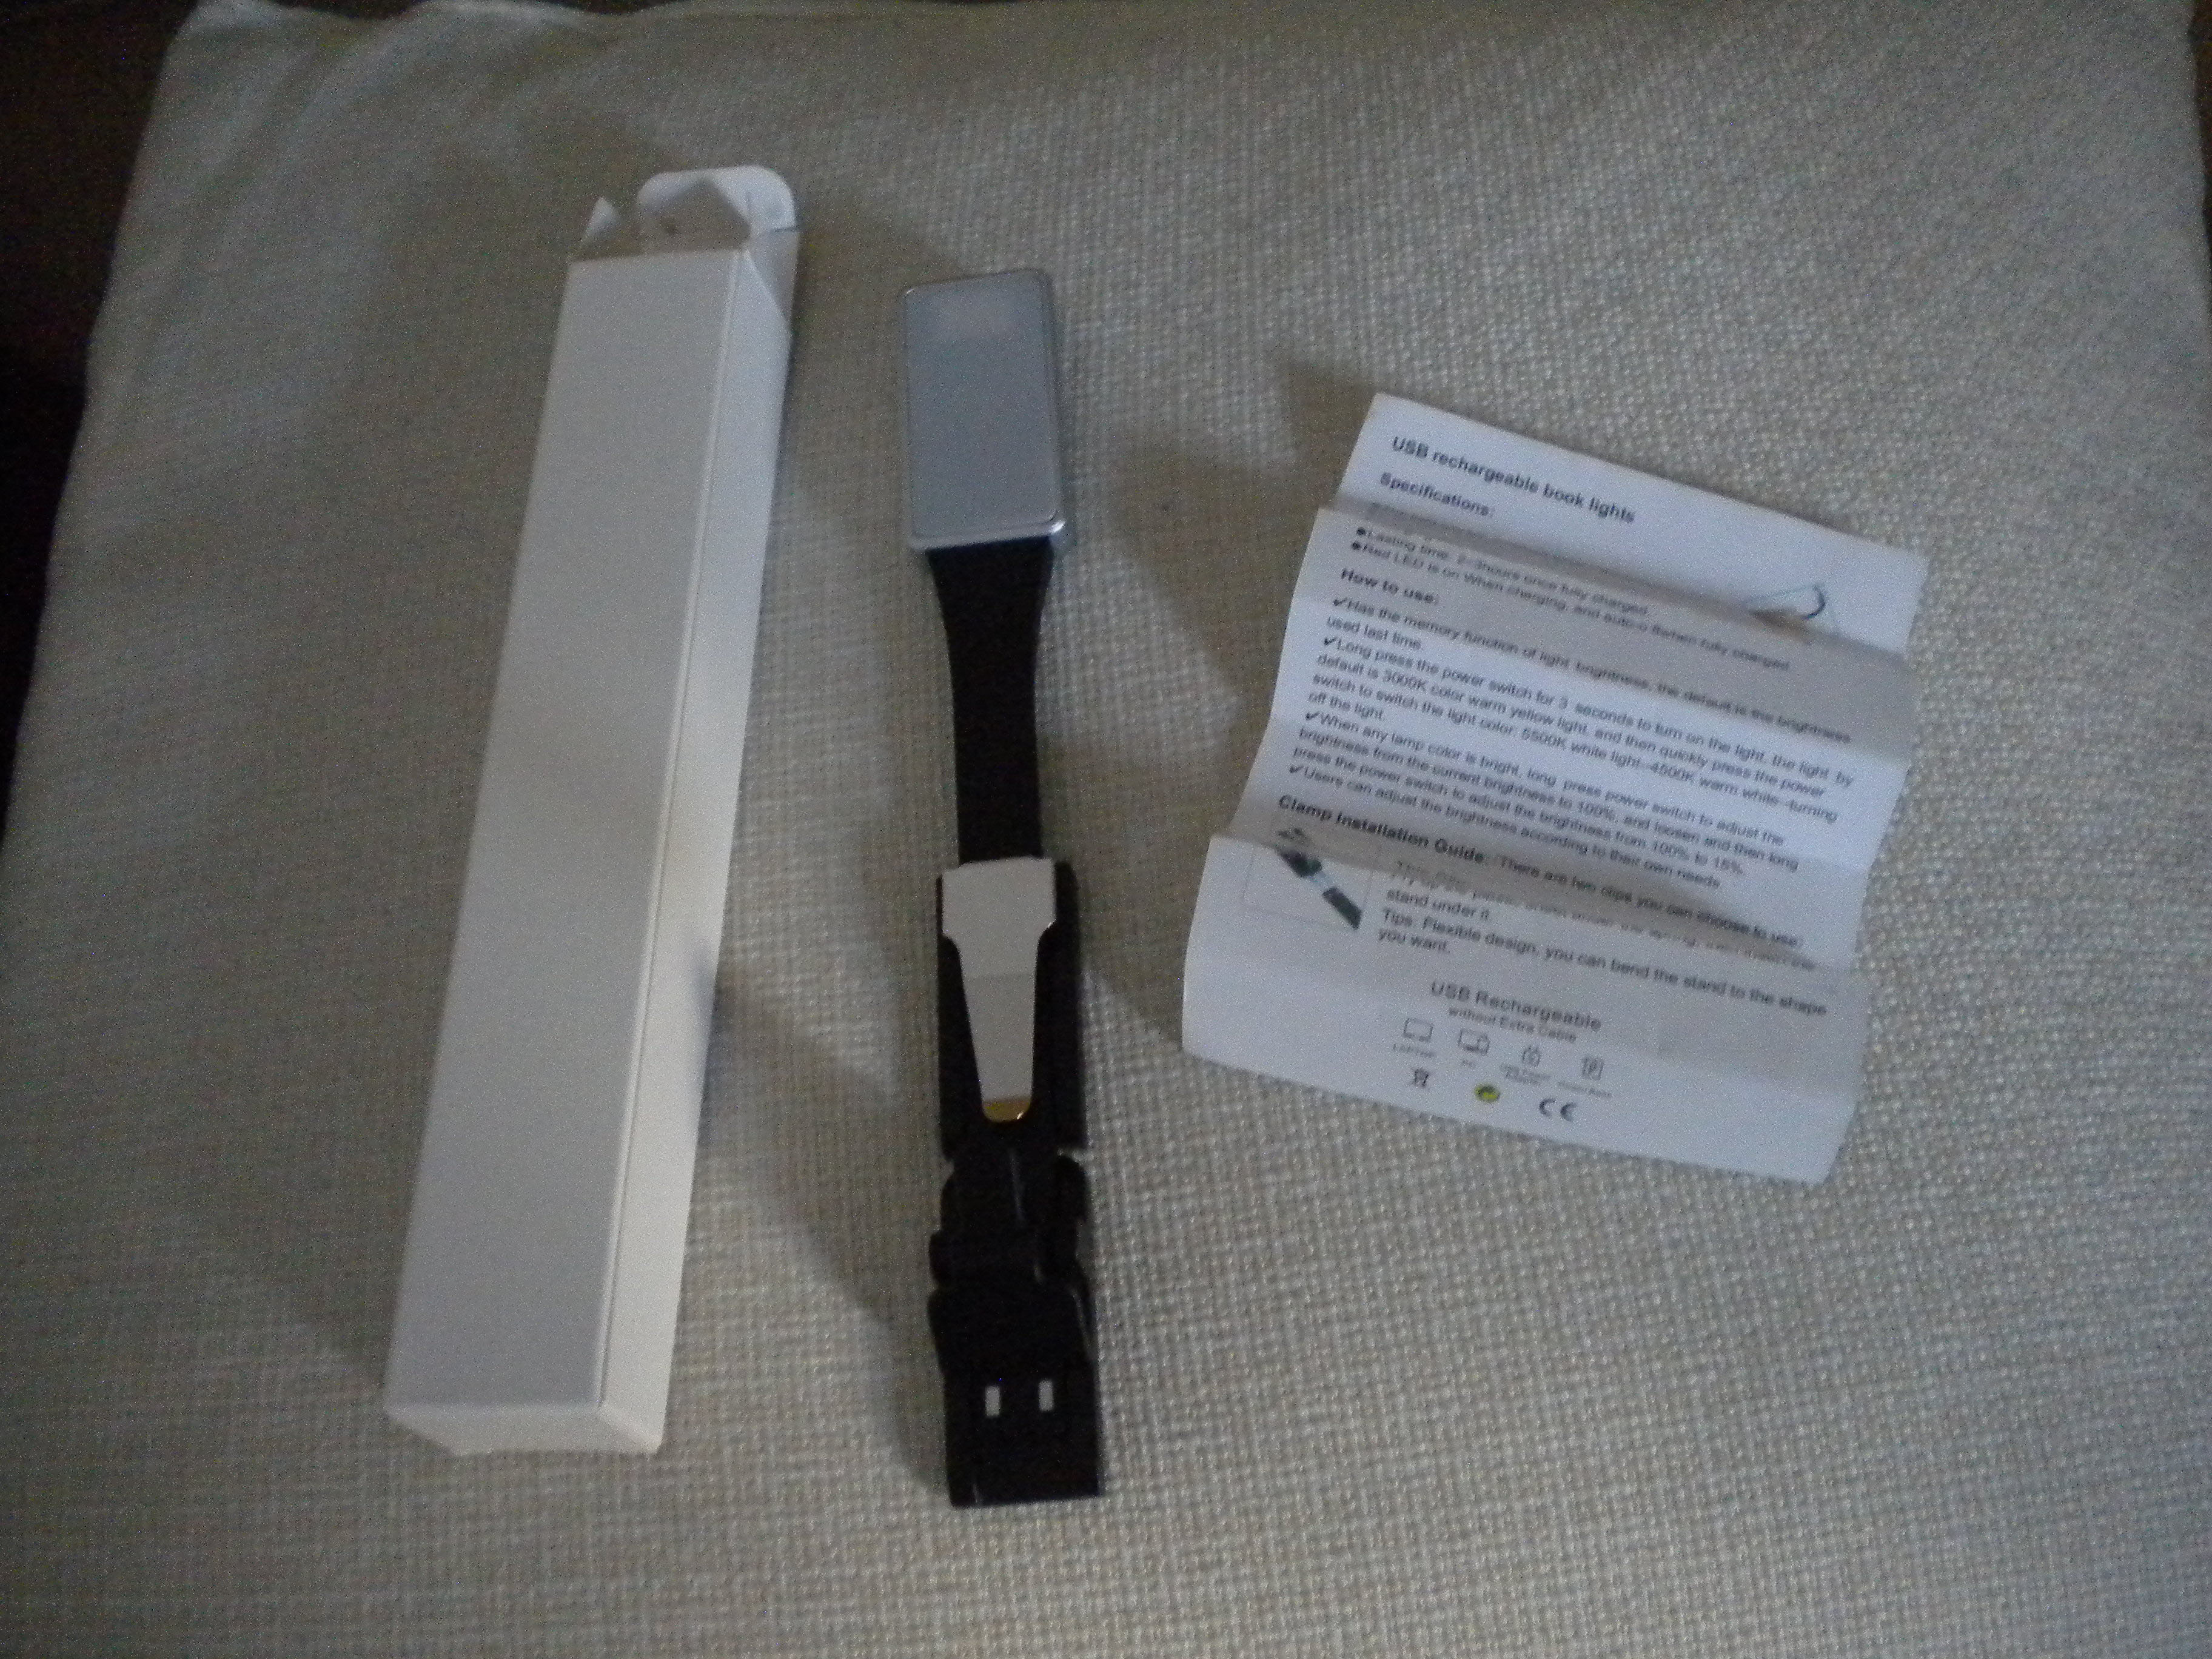 Piccola, potente lampada USB con luce a led